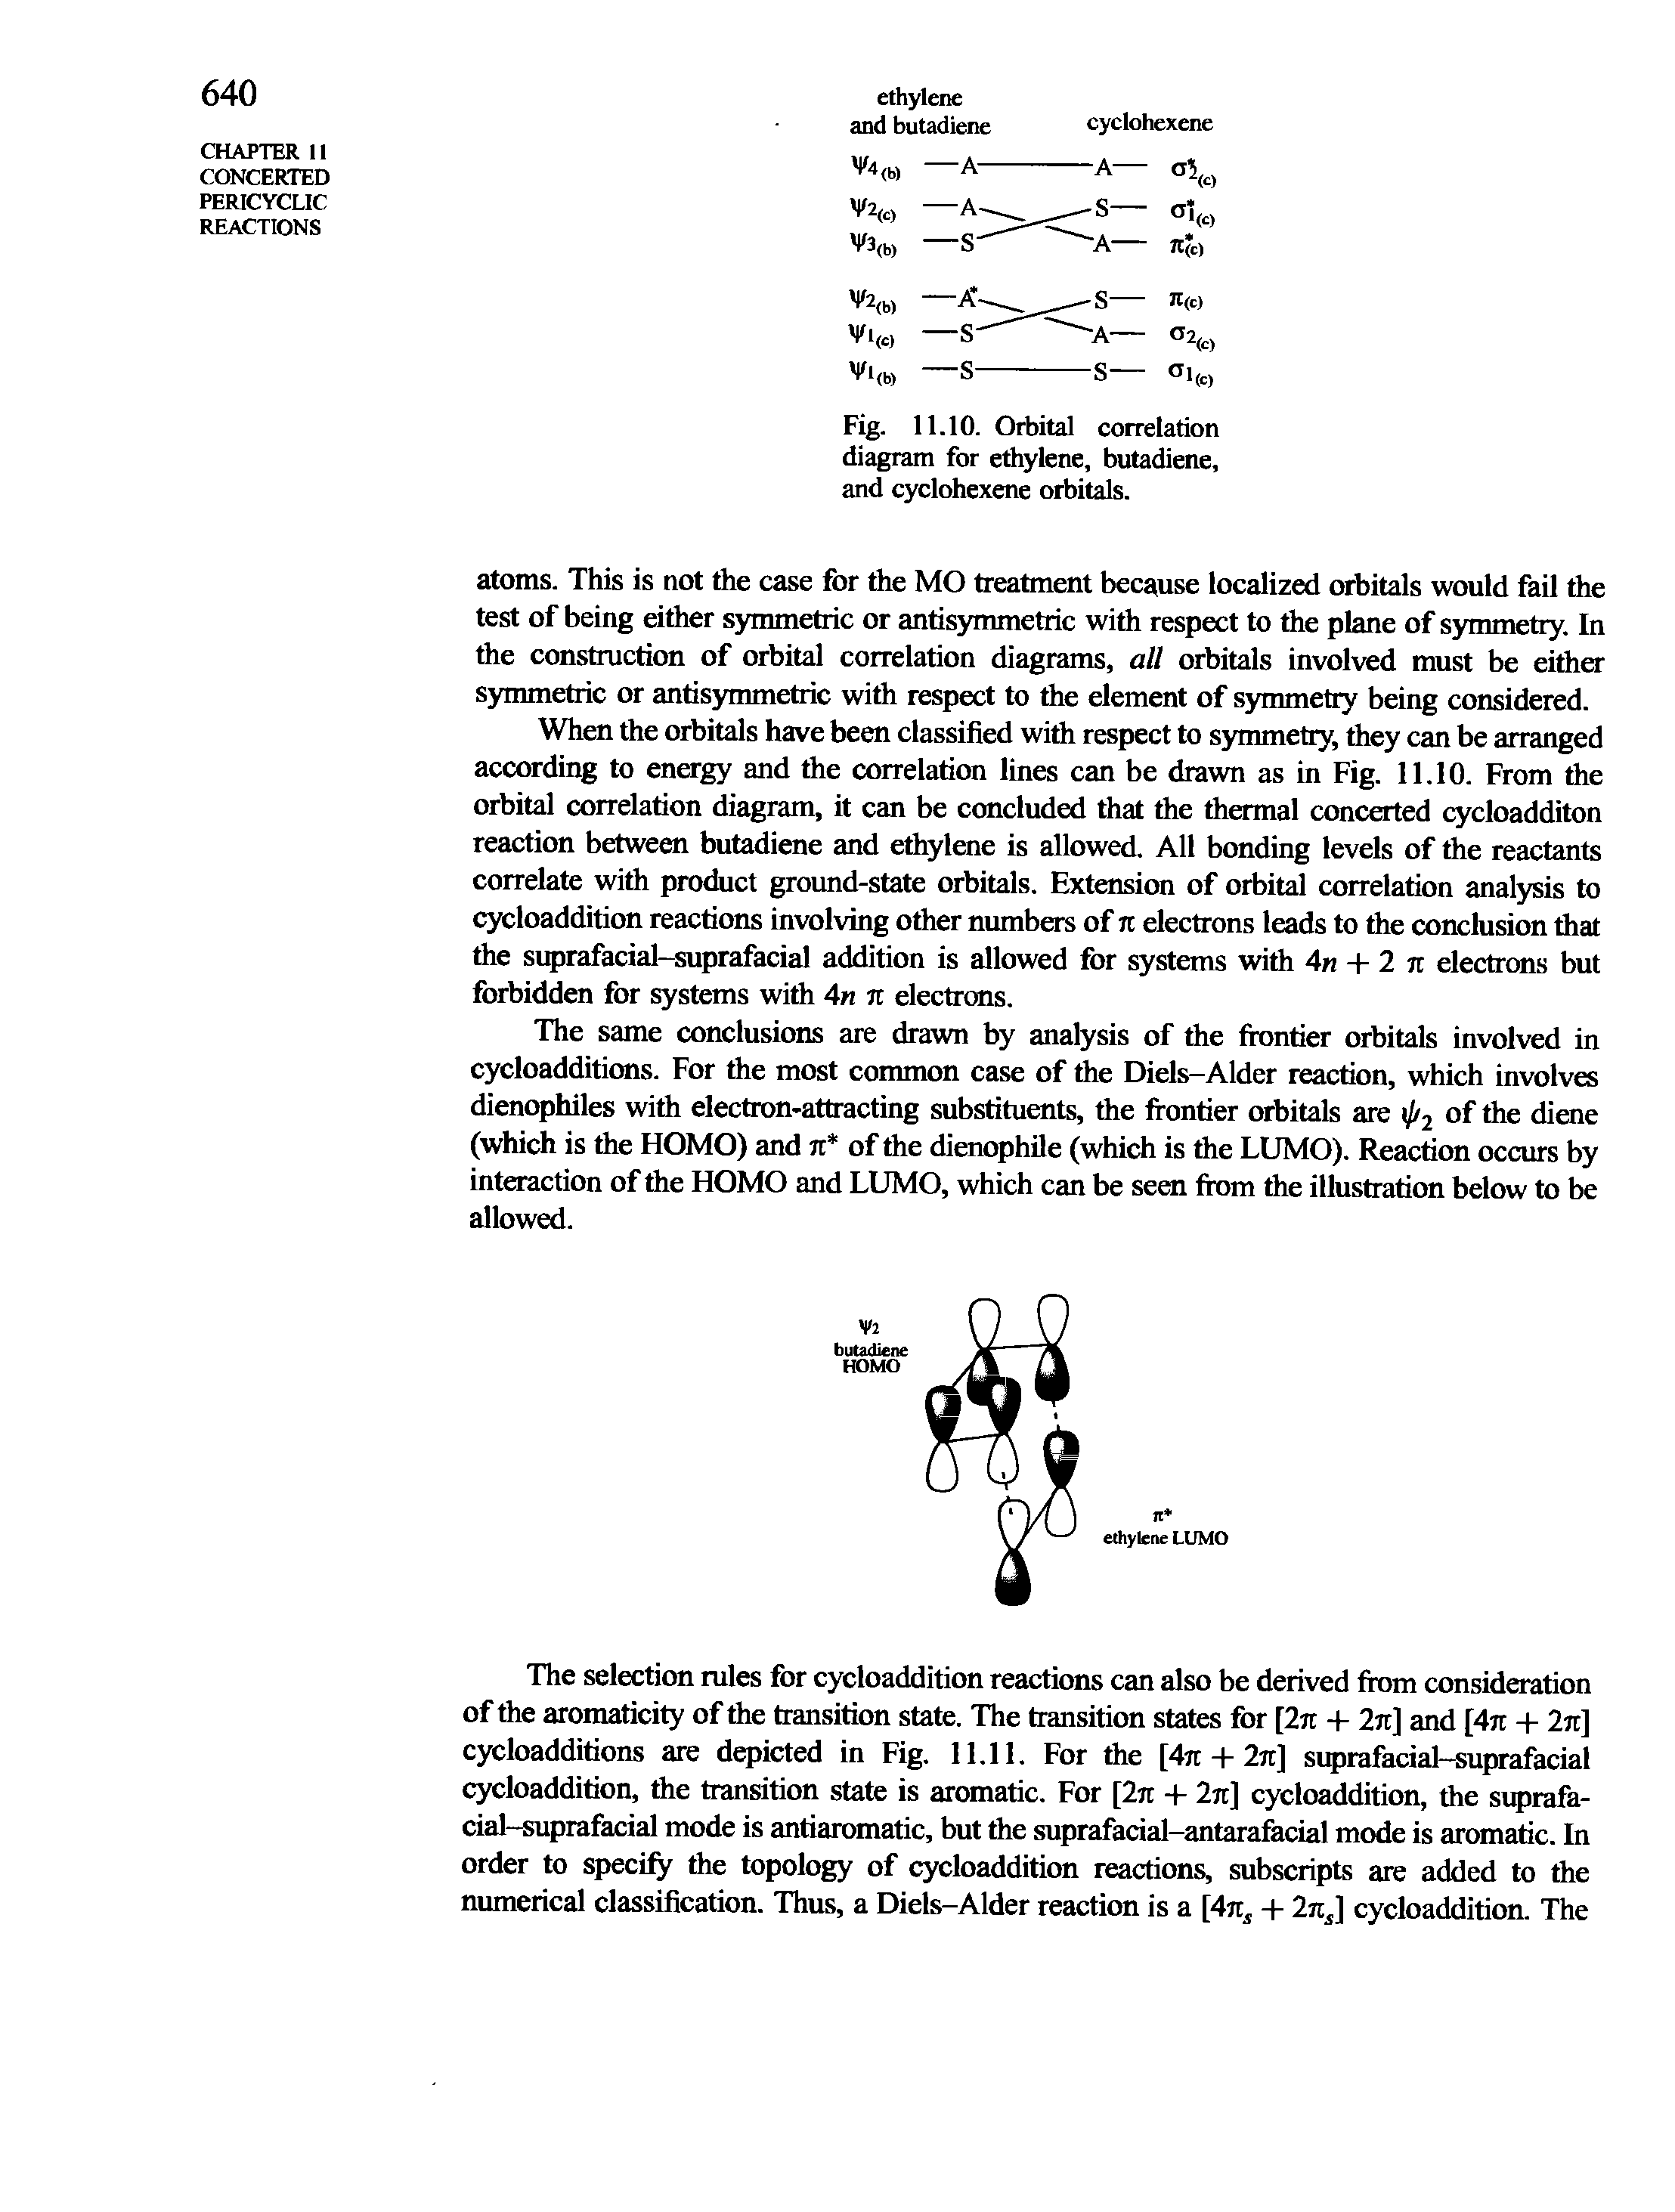 Fig. 11.10. Orbital correlation diagram for ethylene, butadiene, and cyclohexene orbitals.